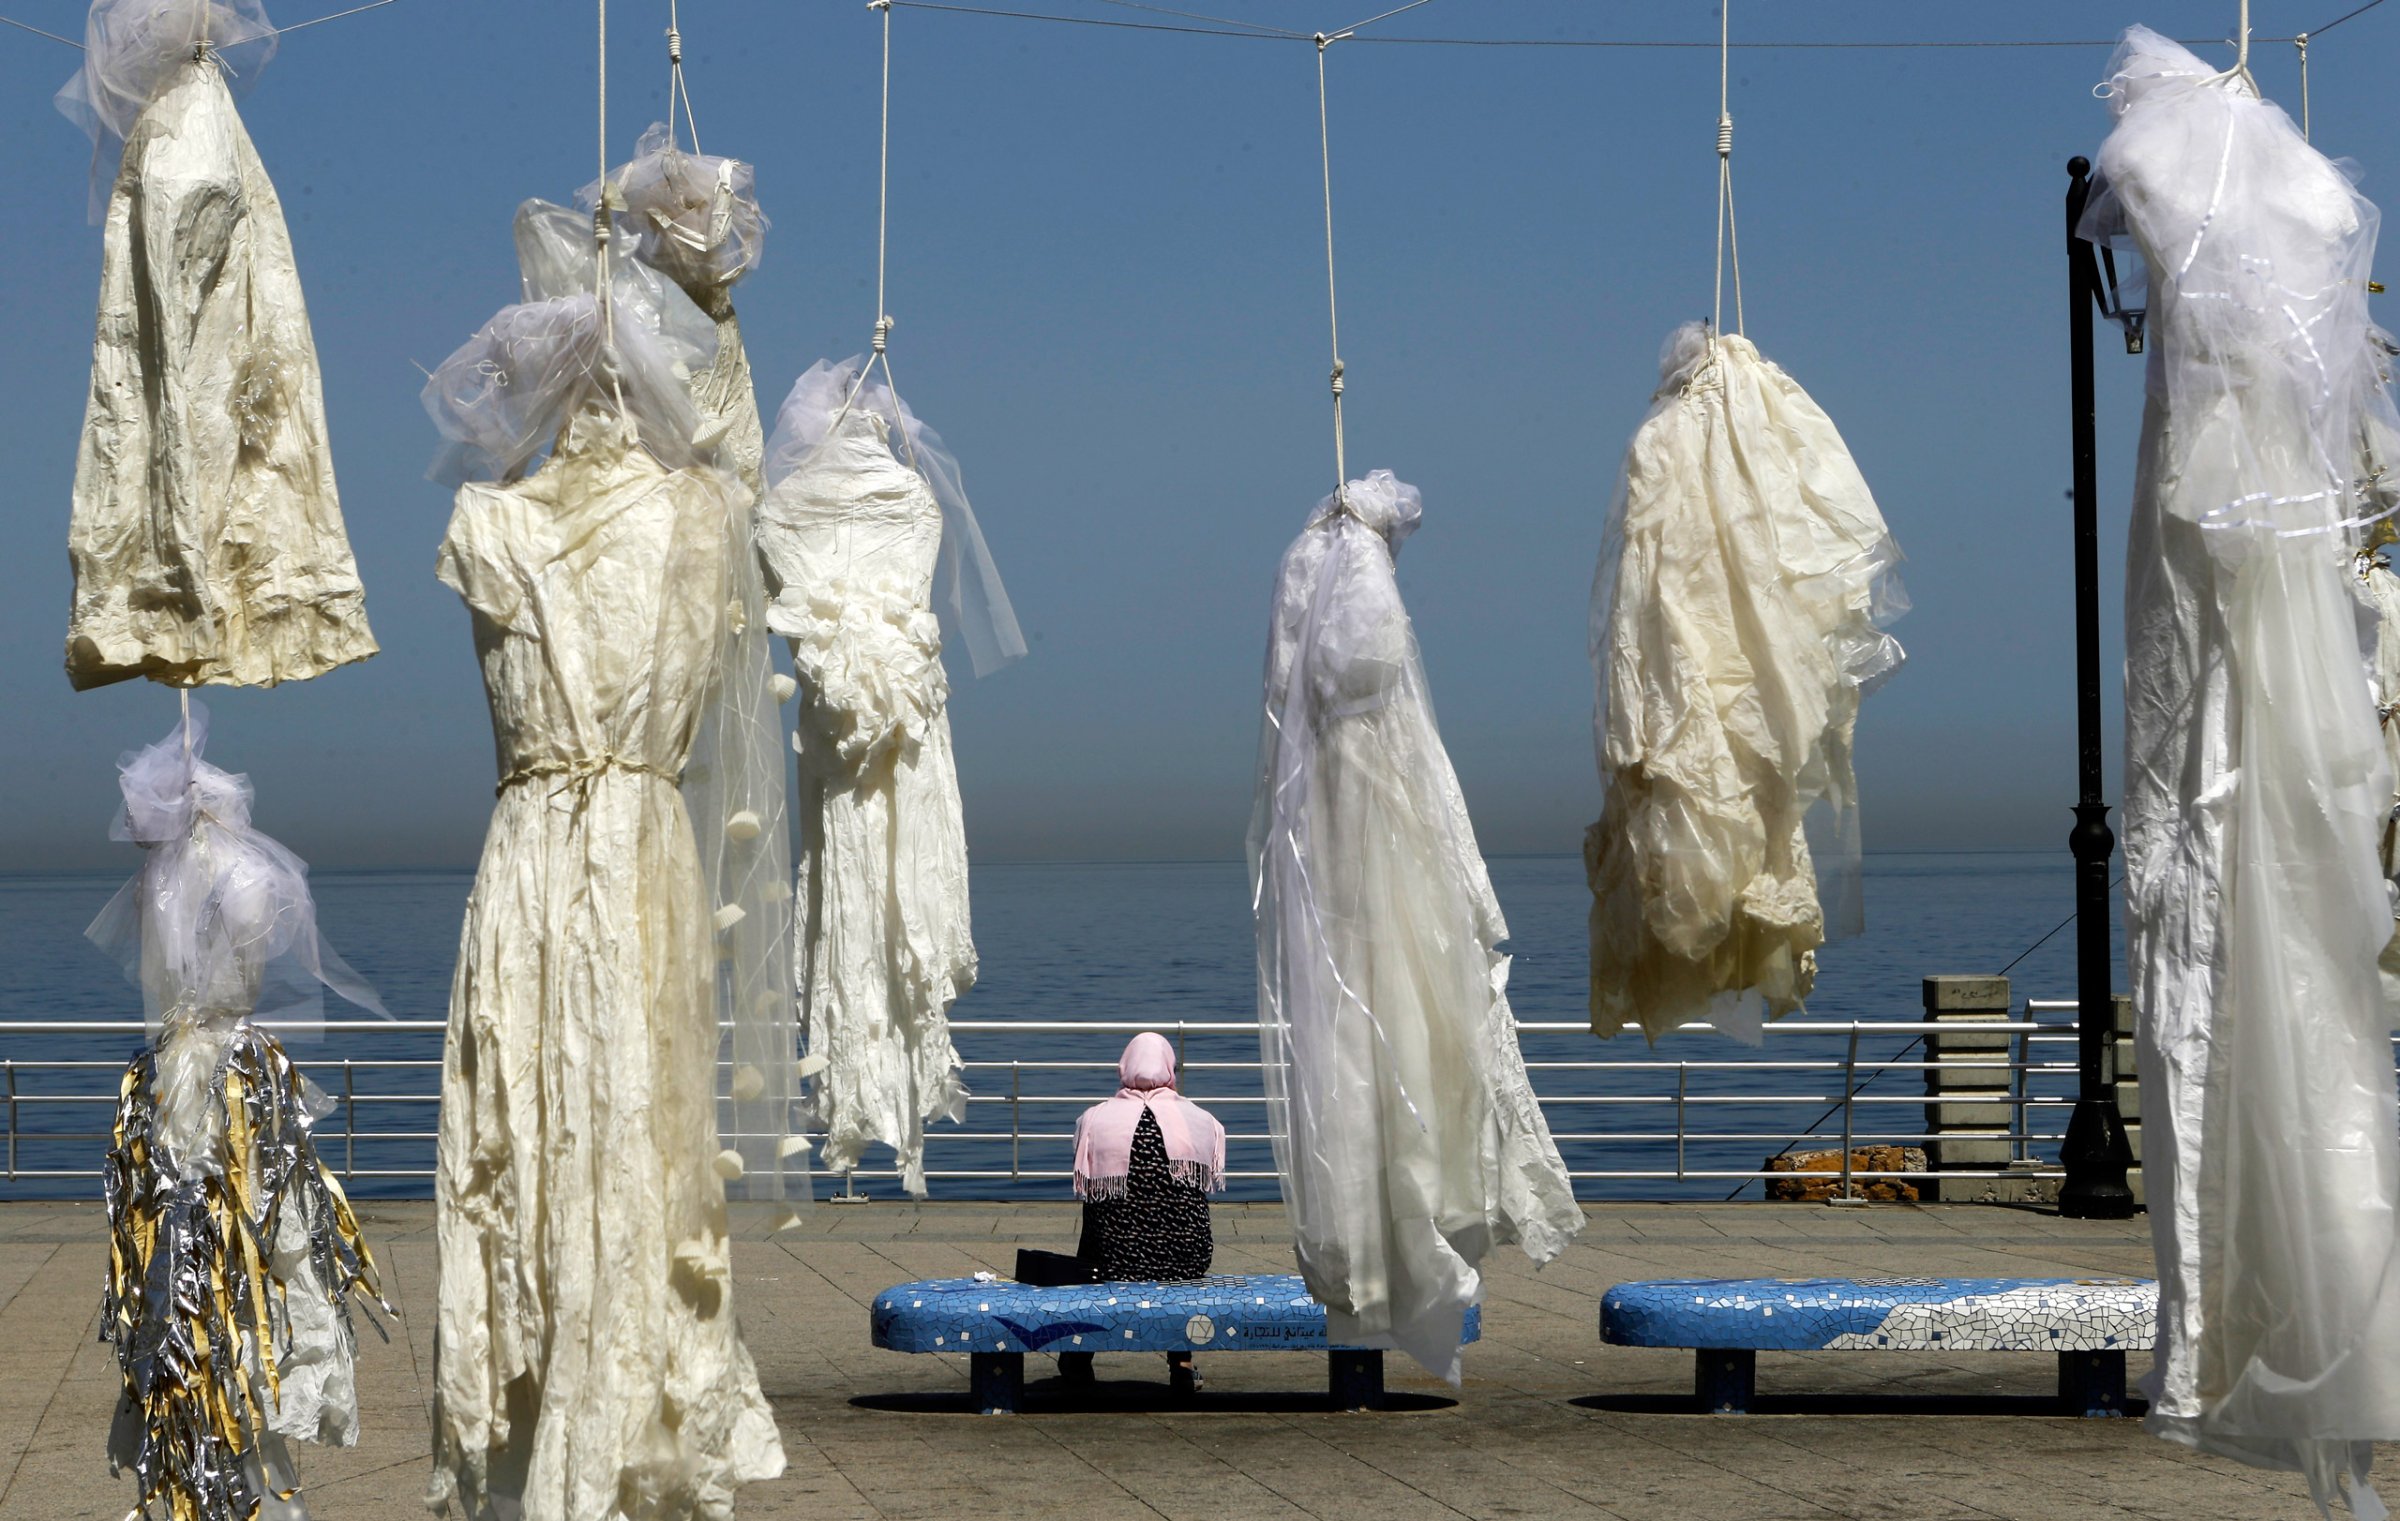 laws-let-rapists-wed-victims-dresses-lebanon